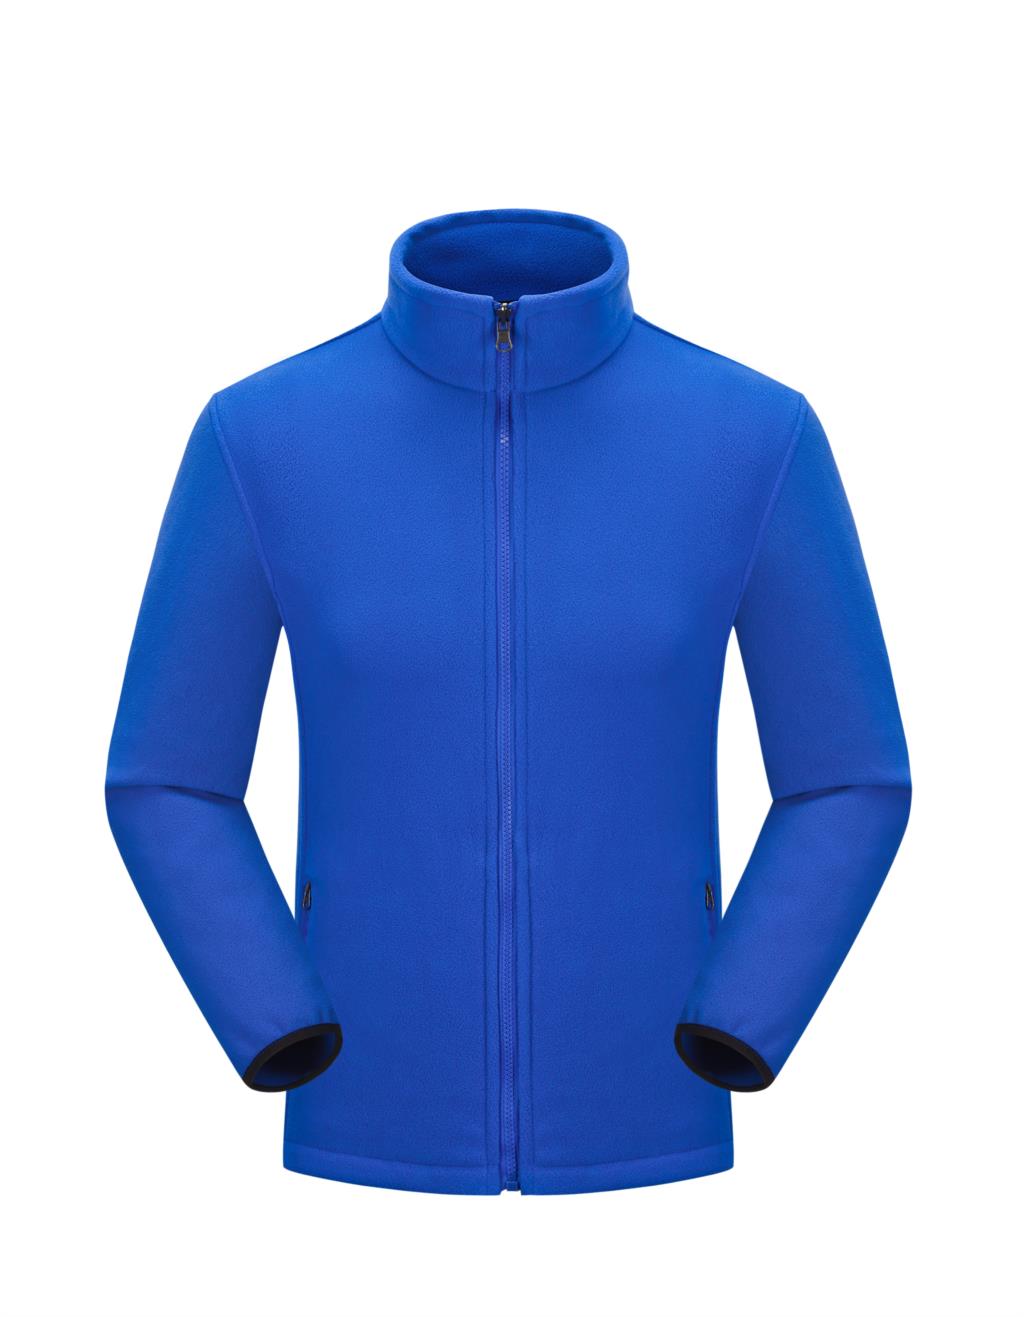 Acheter royal-blue Women long sleeve Zip up Fleece Sweatshirts for Running